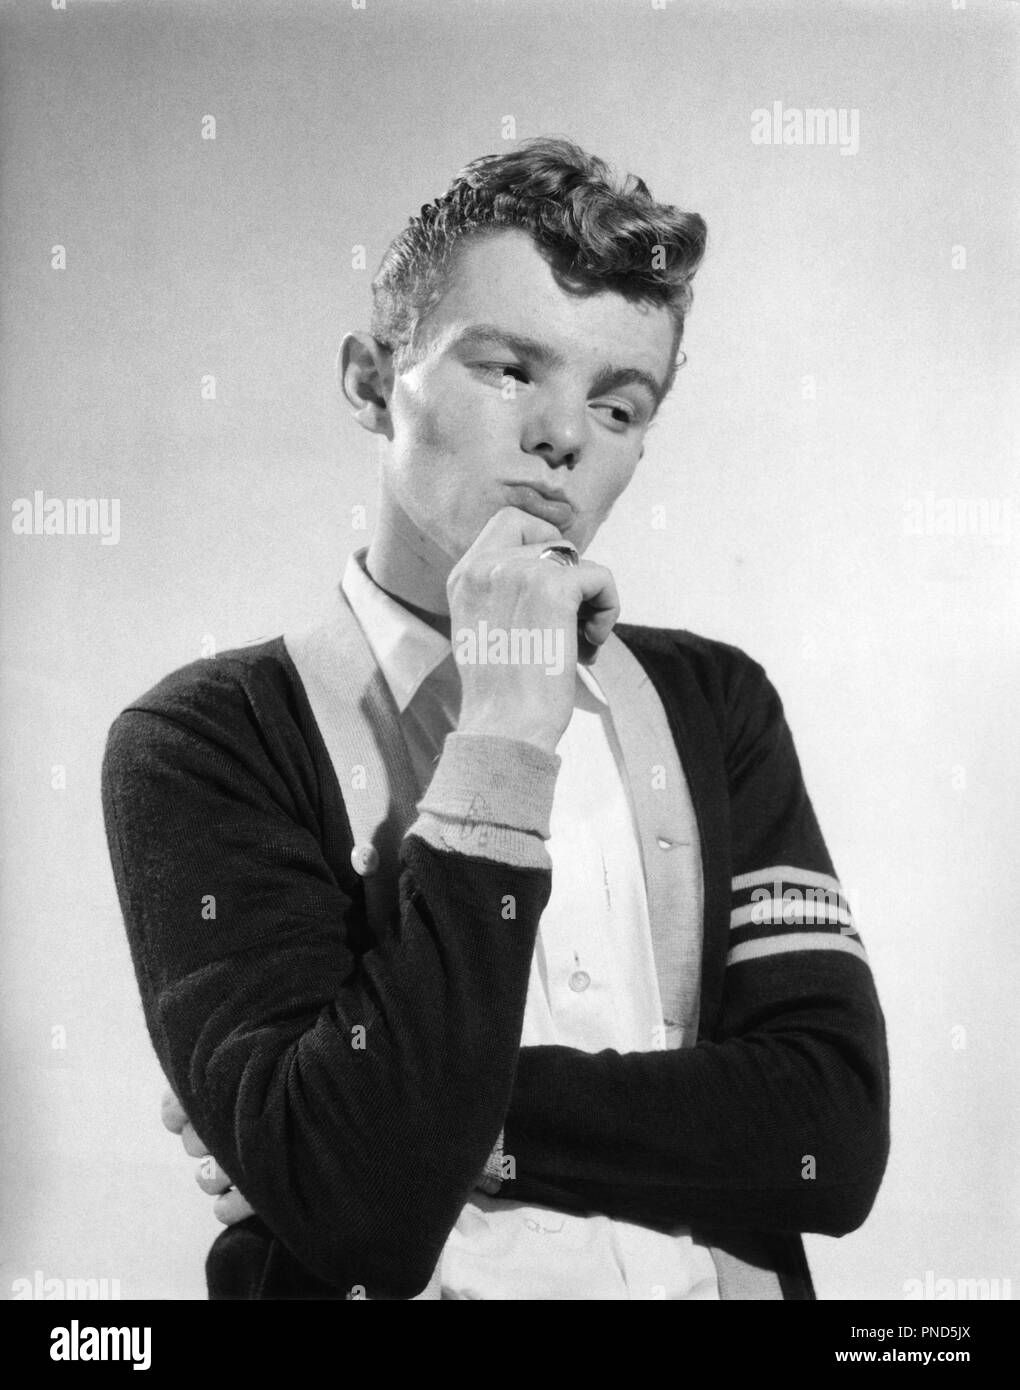 1950s thoughtful thinking teen boy wearing varsity sweater - p1811